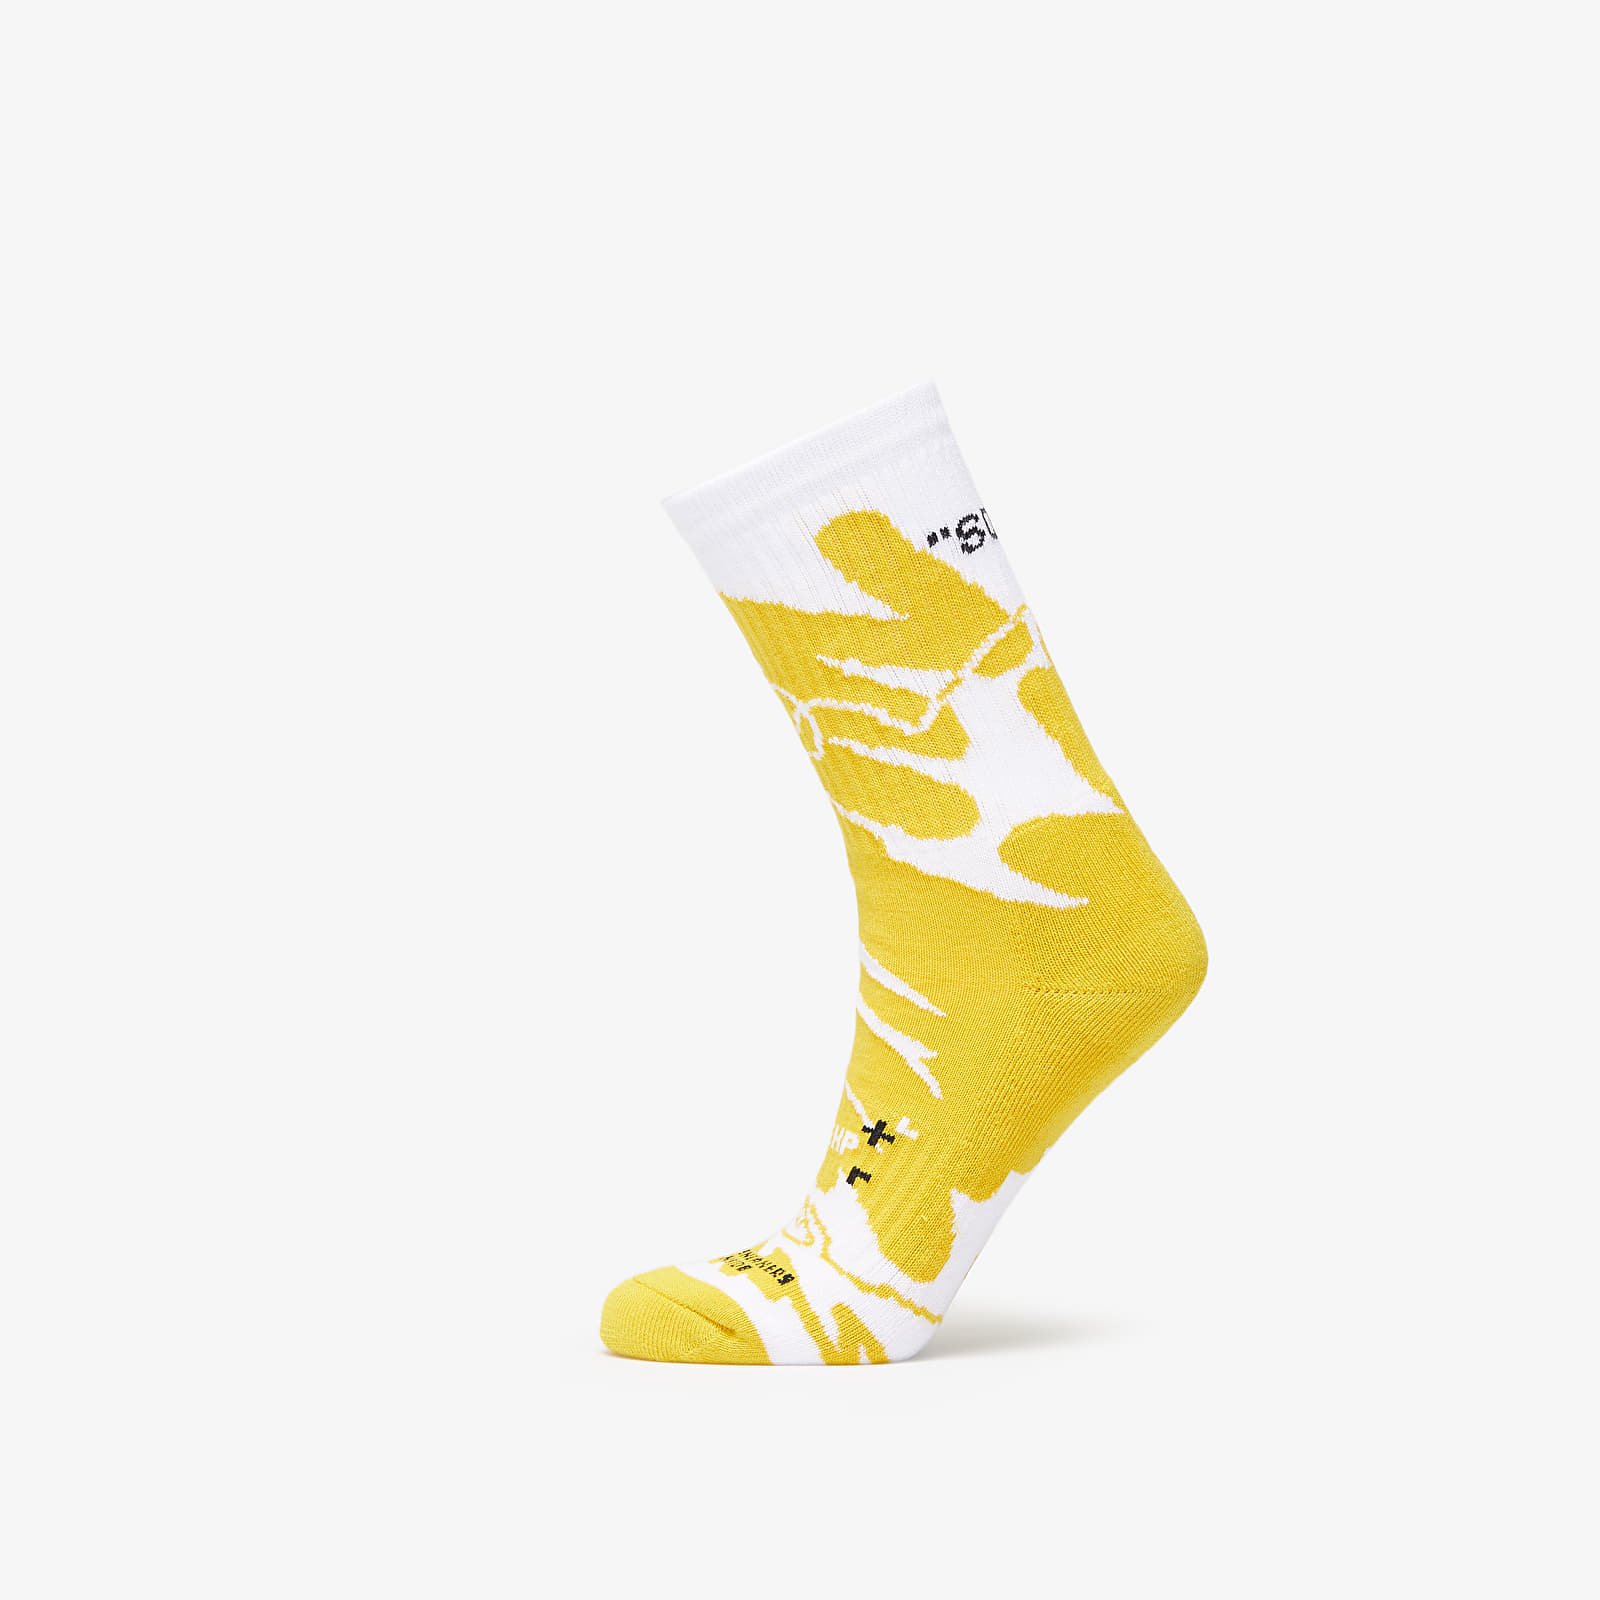 Calzetti Footshop The "Basketball" Socks White/ Yellow